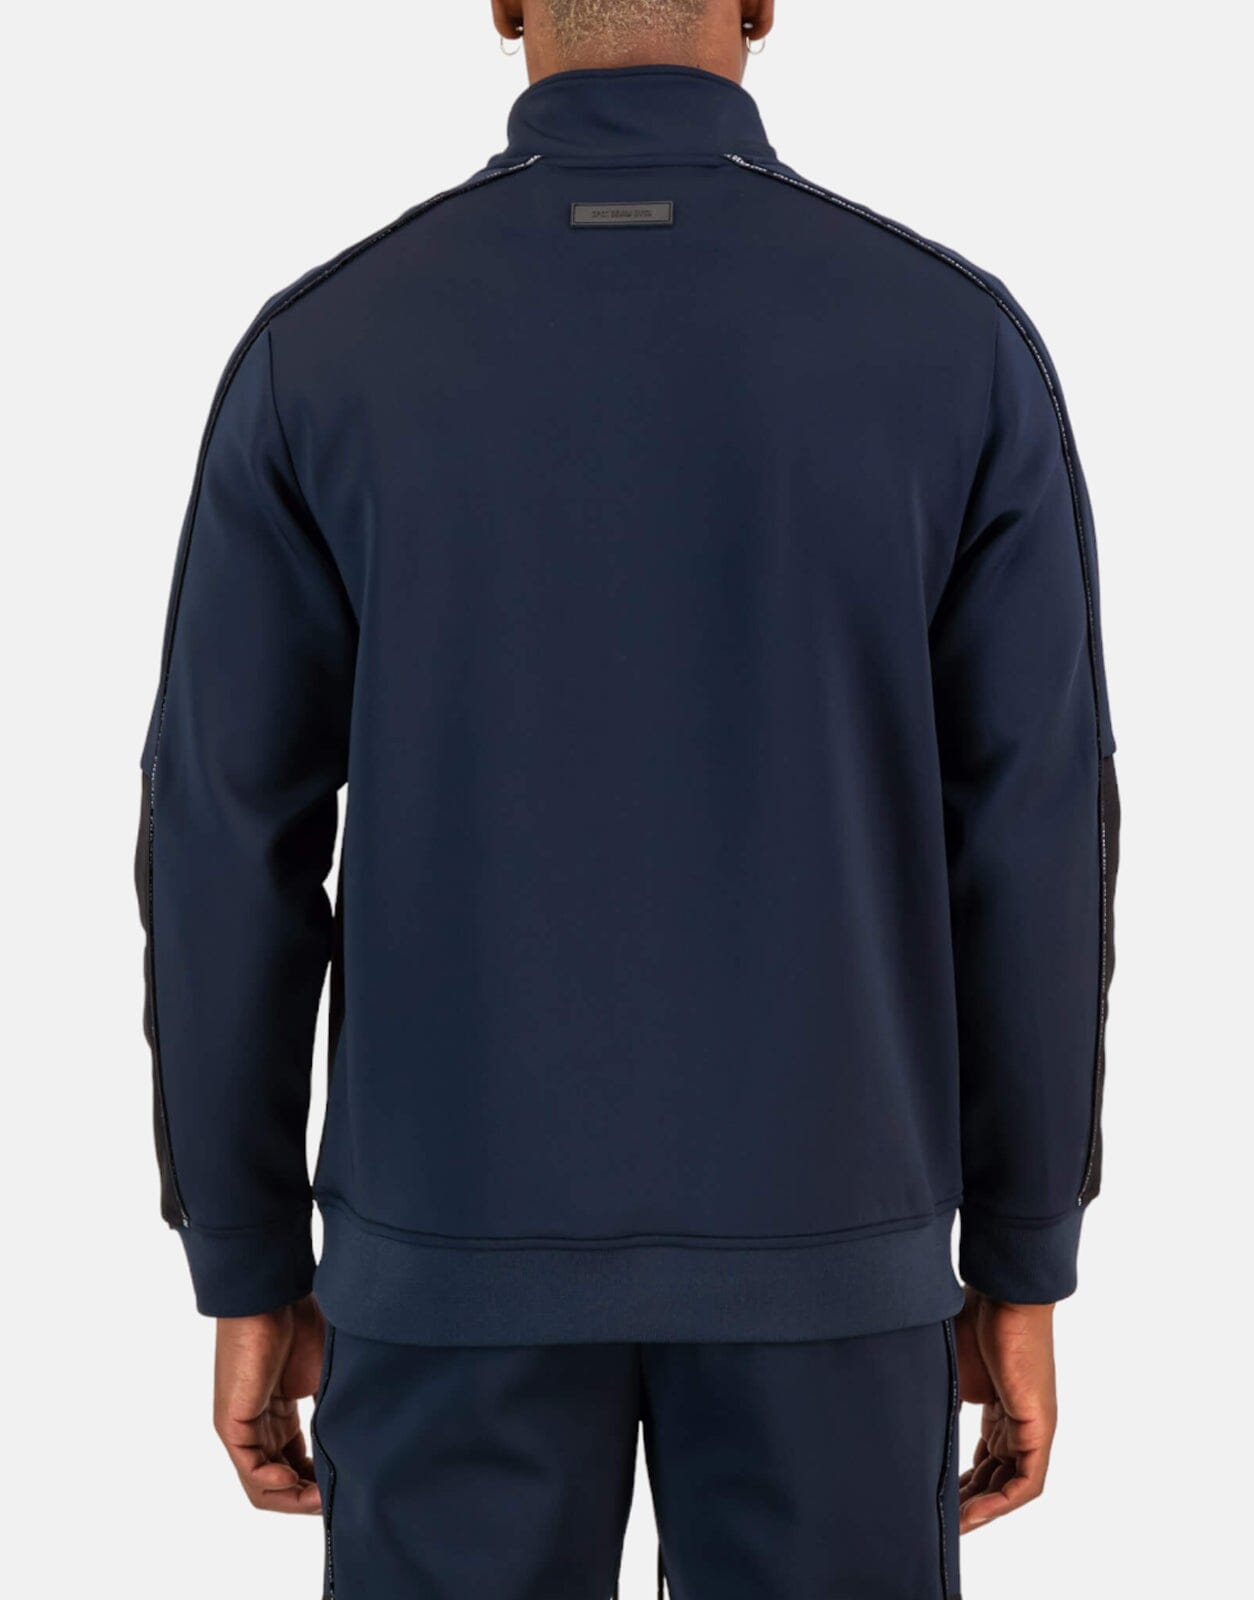 SPCC Kiston Navy Zip Sweatshirt - Subwear